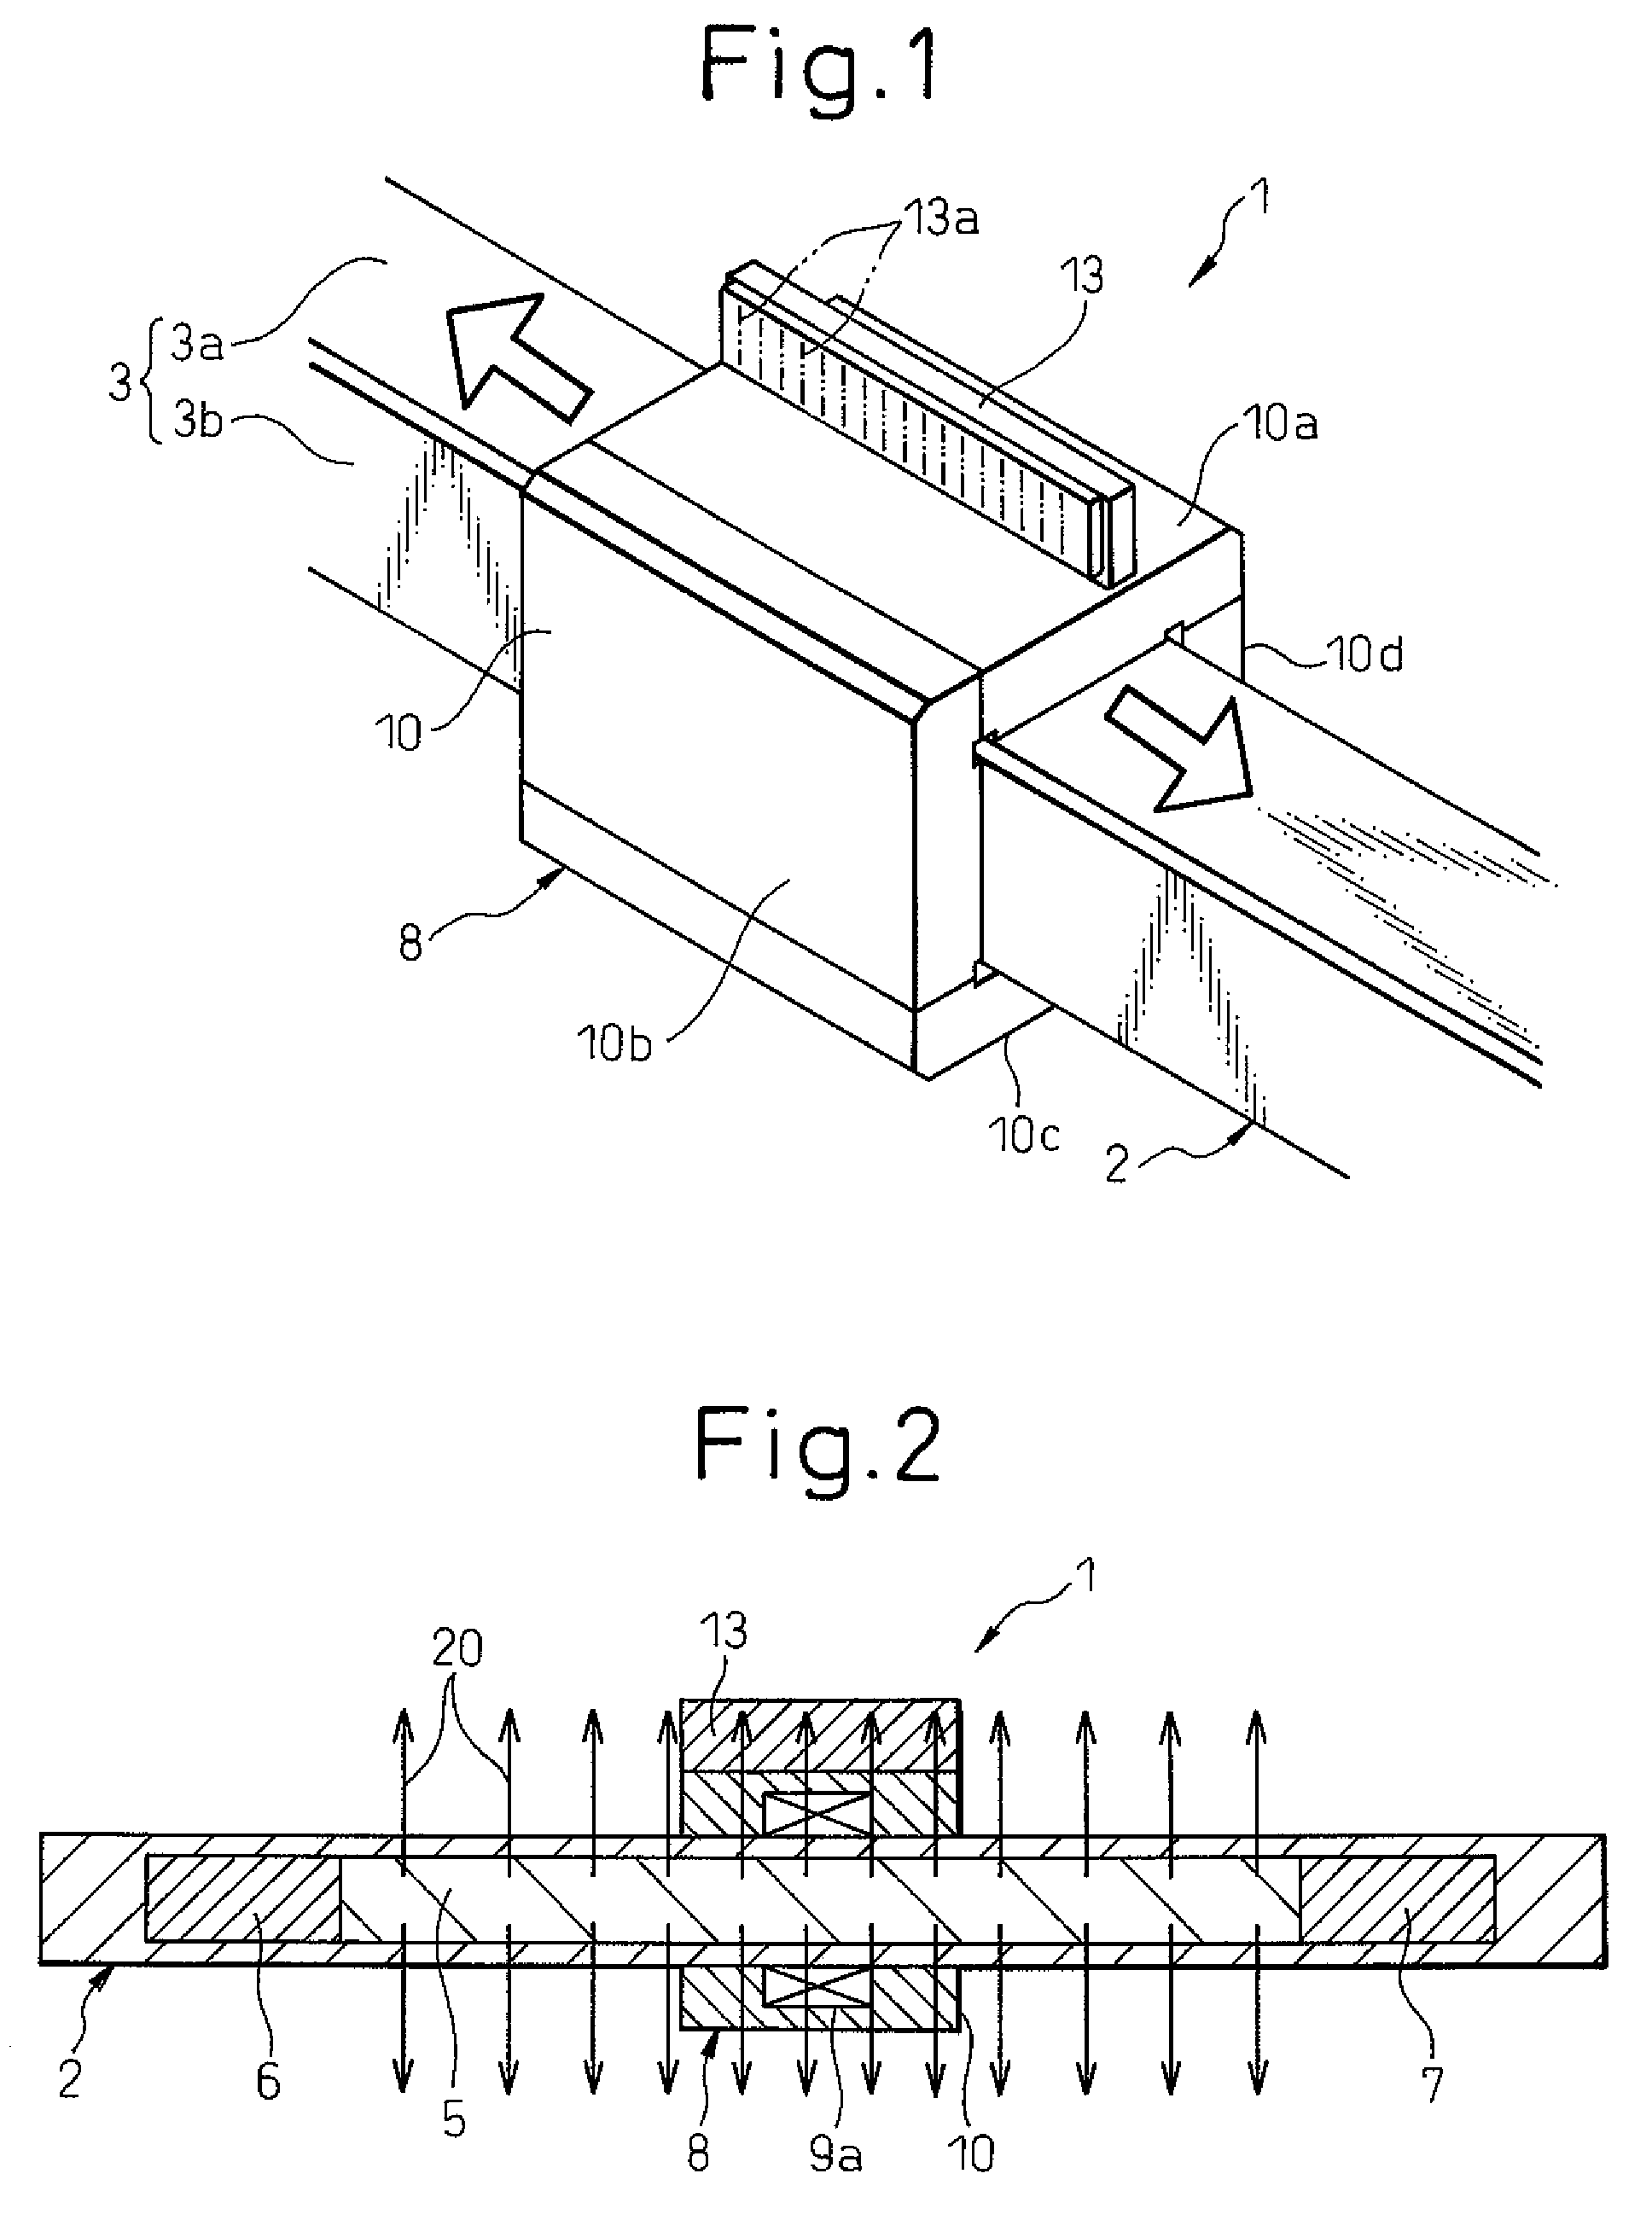 Linear drive apparatus